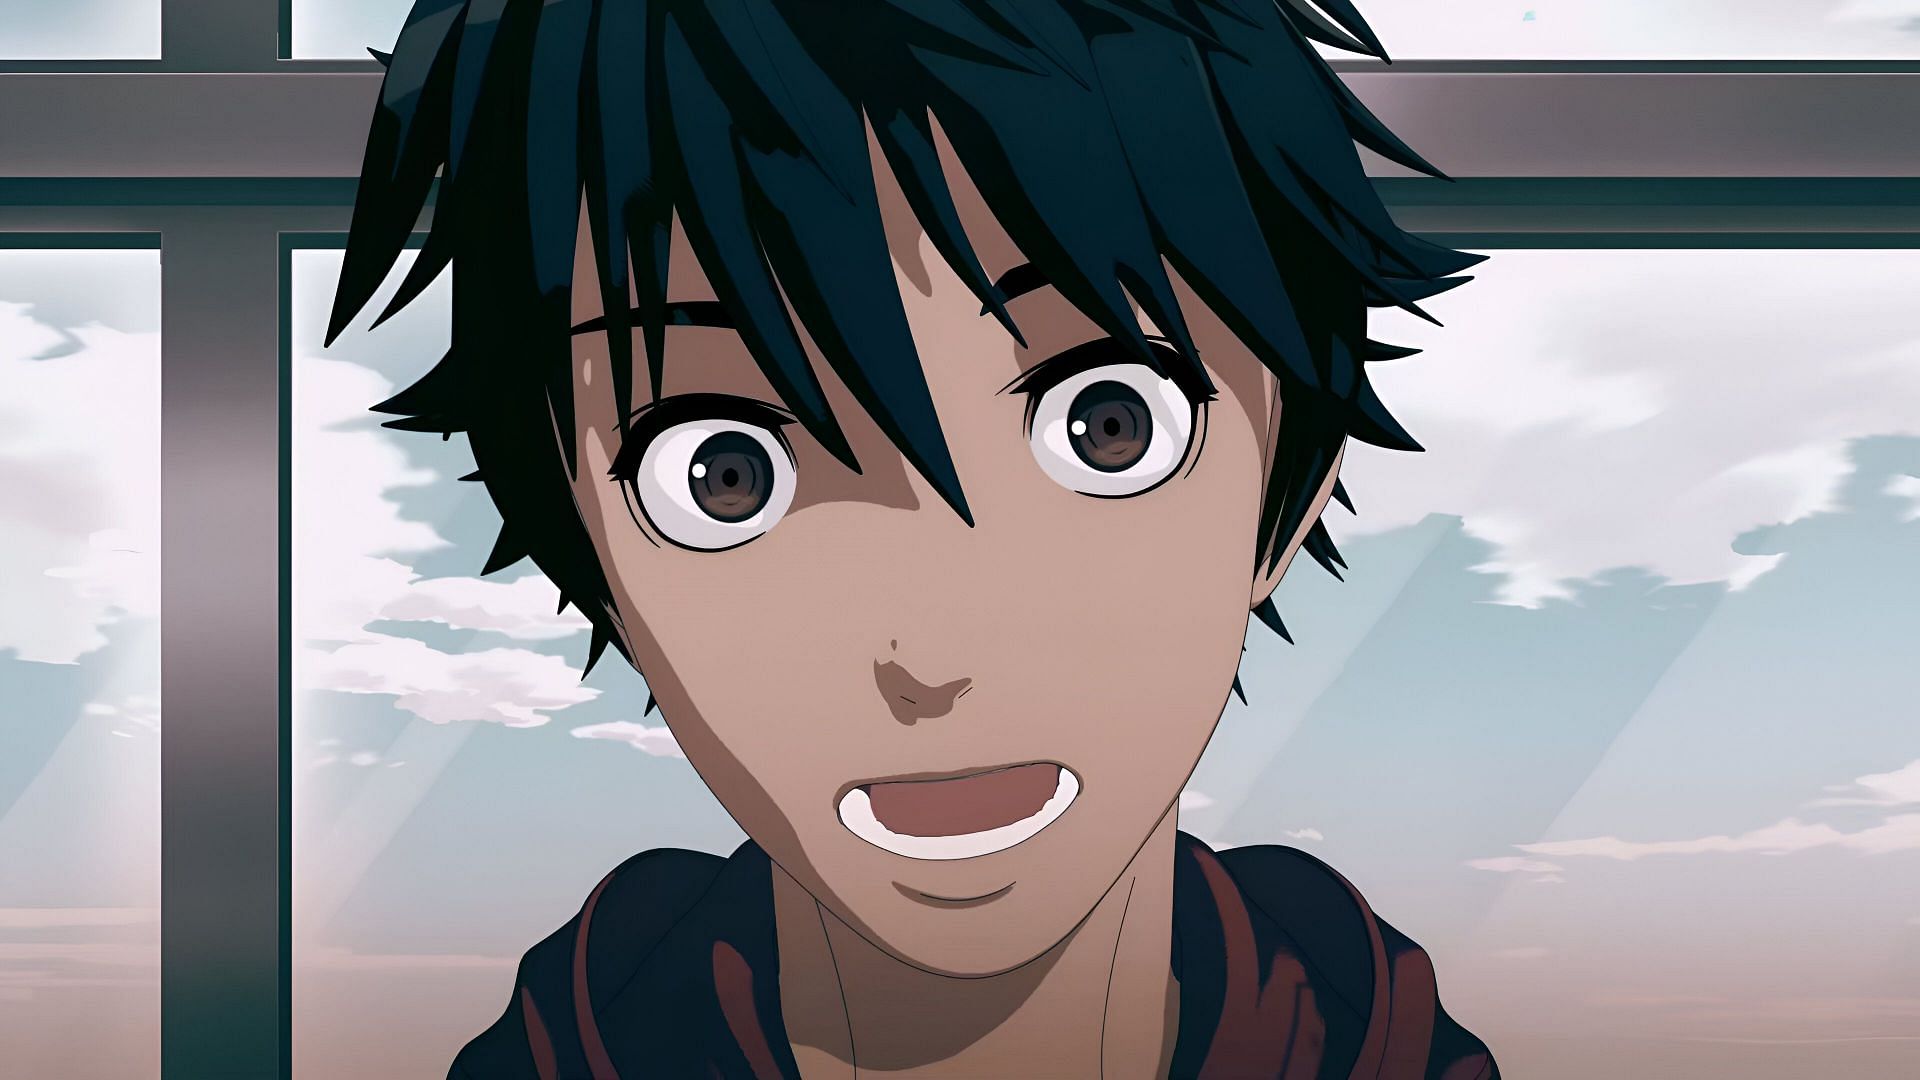 Akira as seen in the anime (Image via Visual Flight)